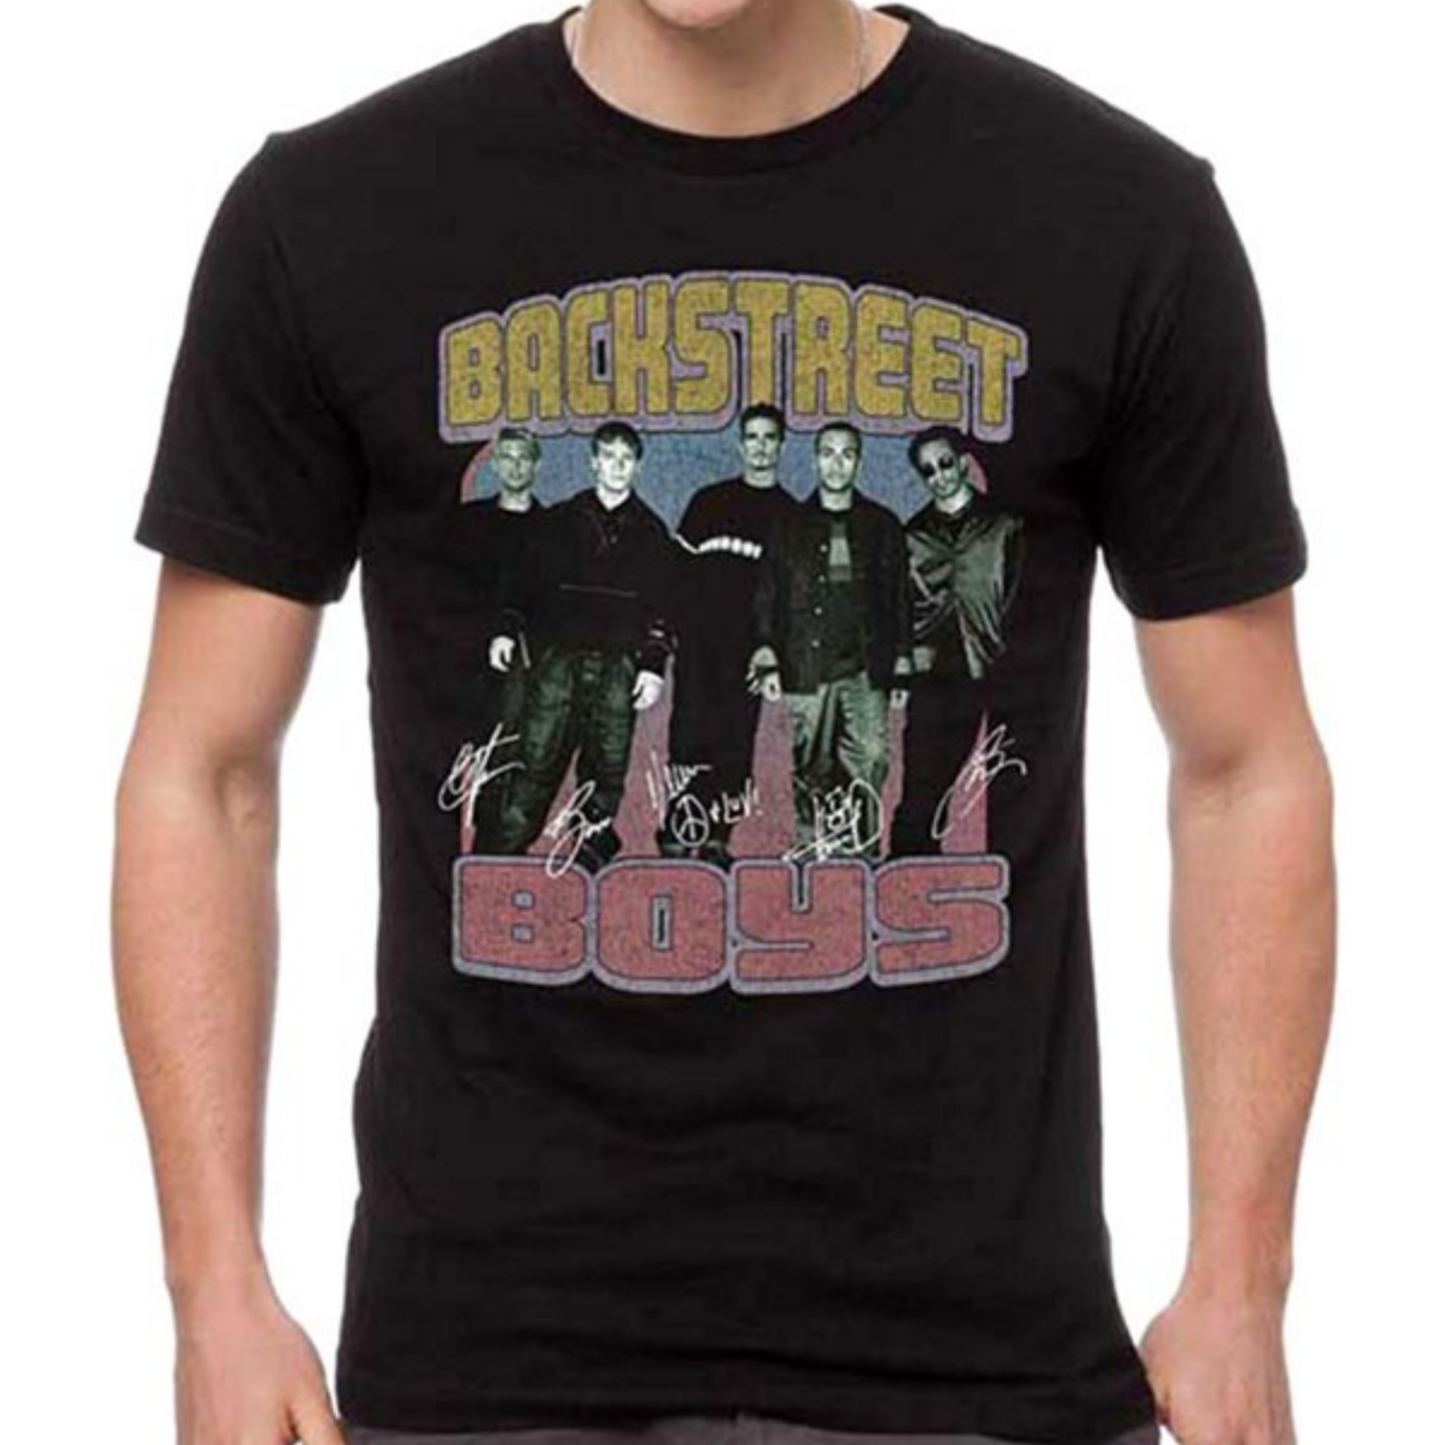 Backstreet Boys Vintage Style Distressed Graphic T-Shirt